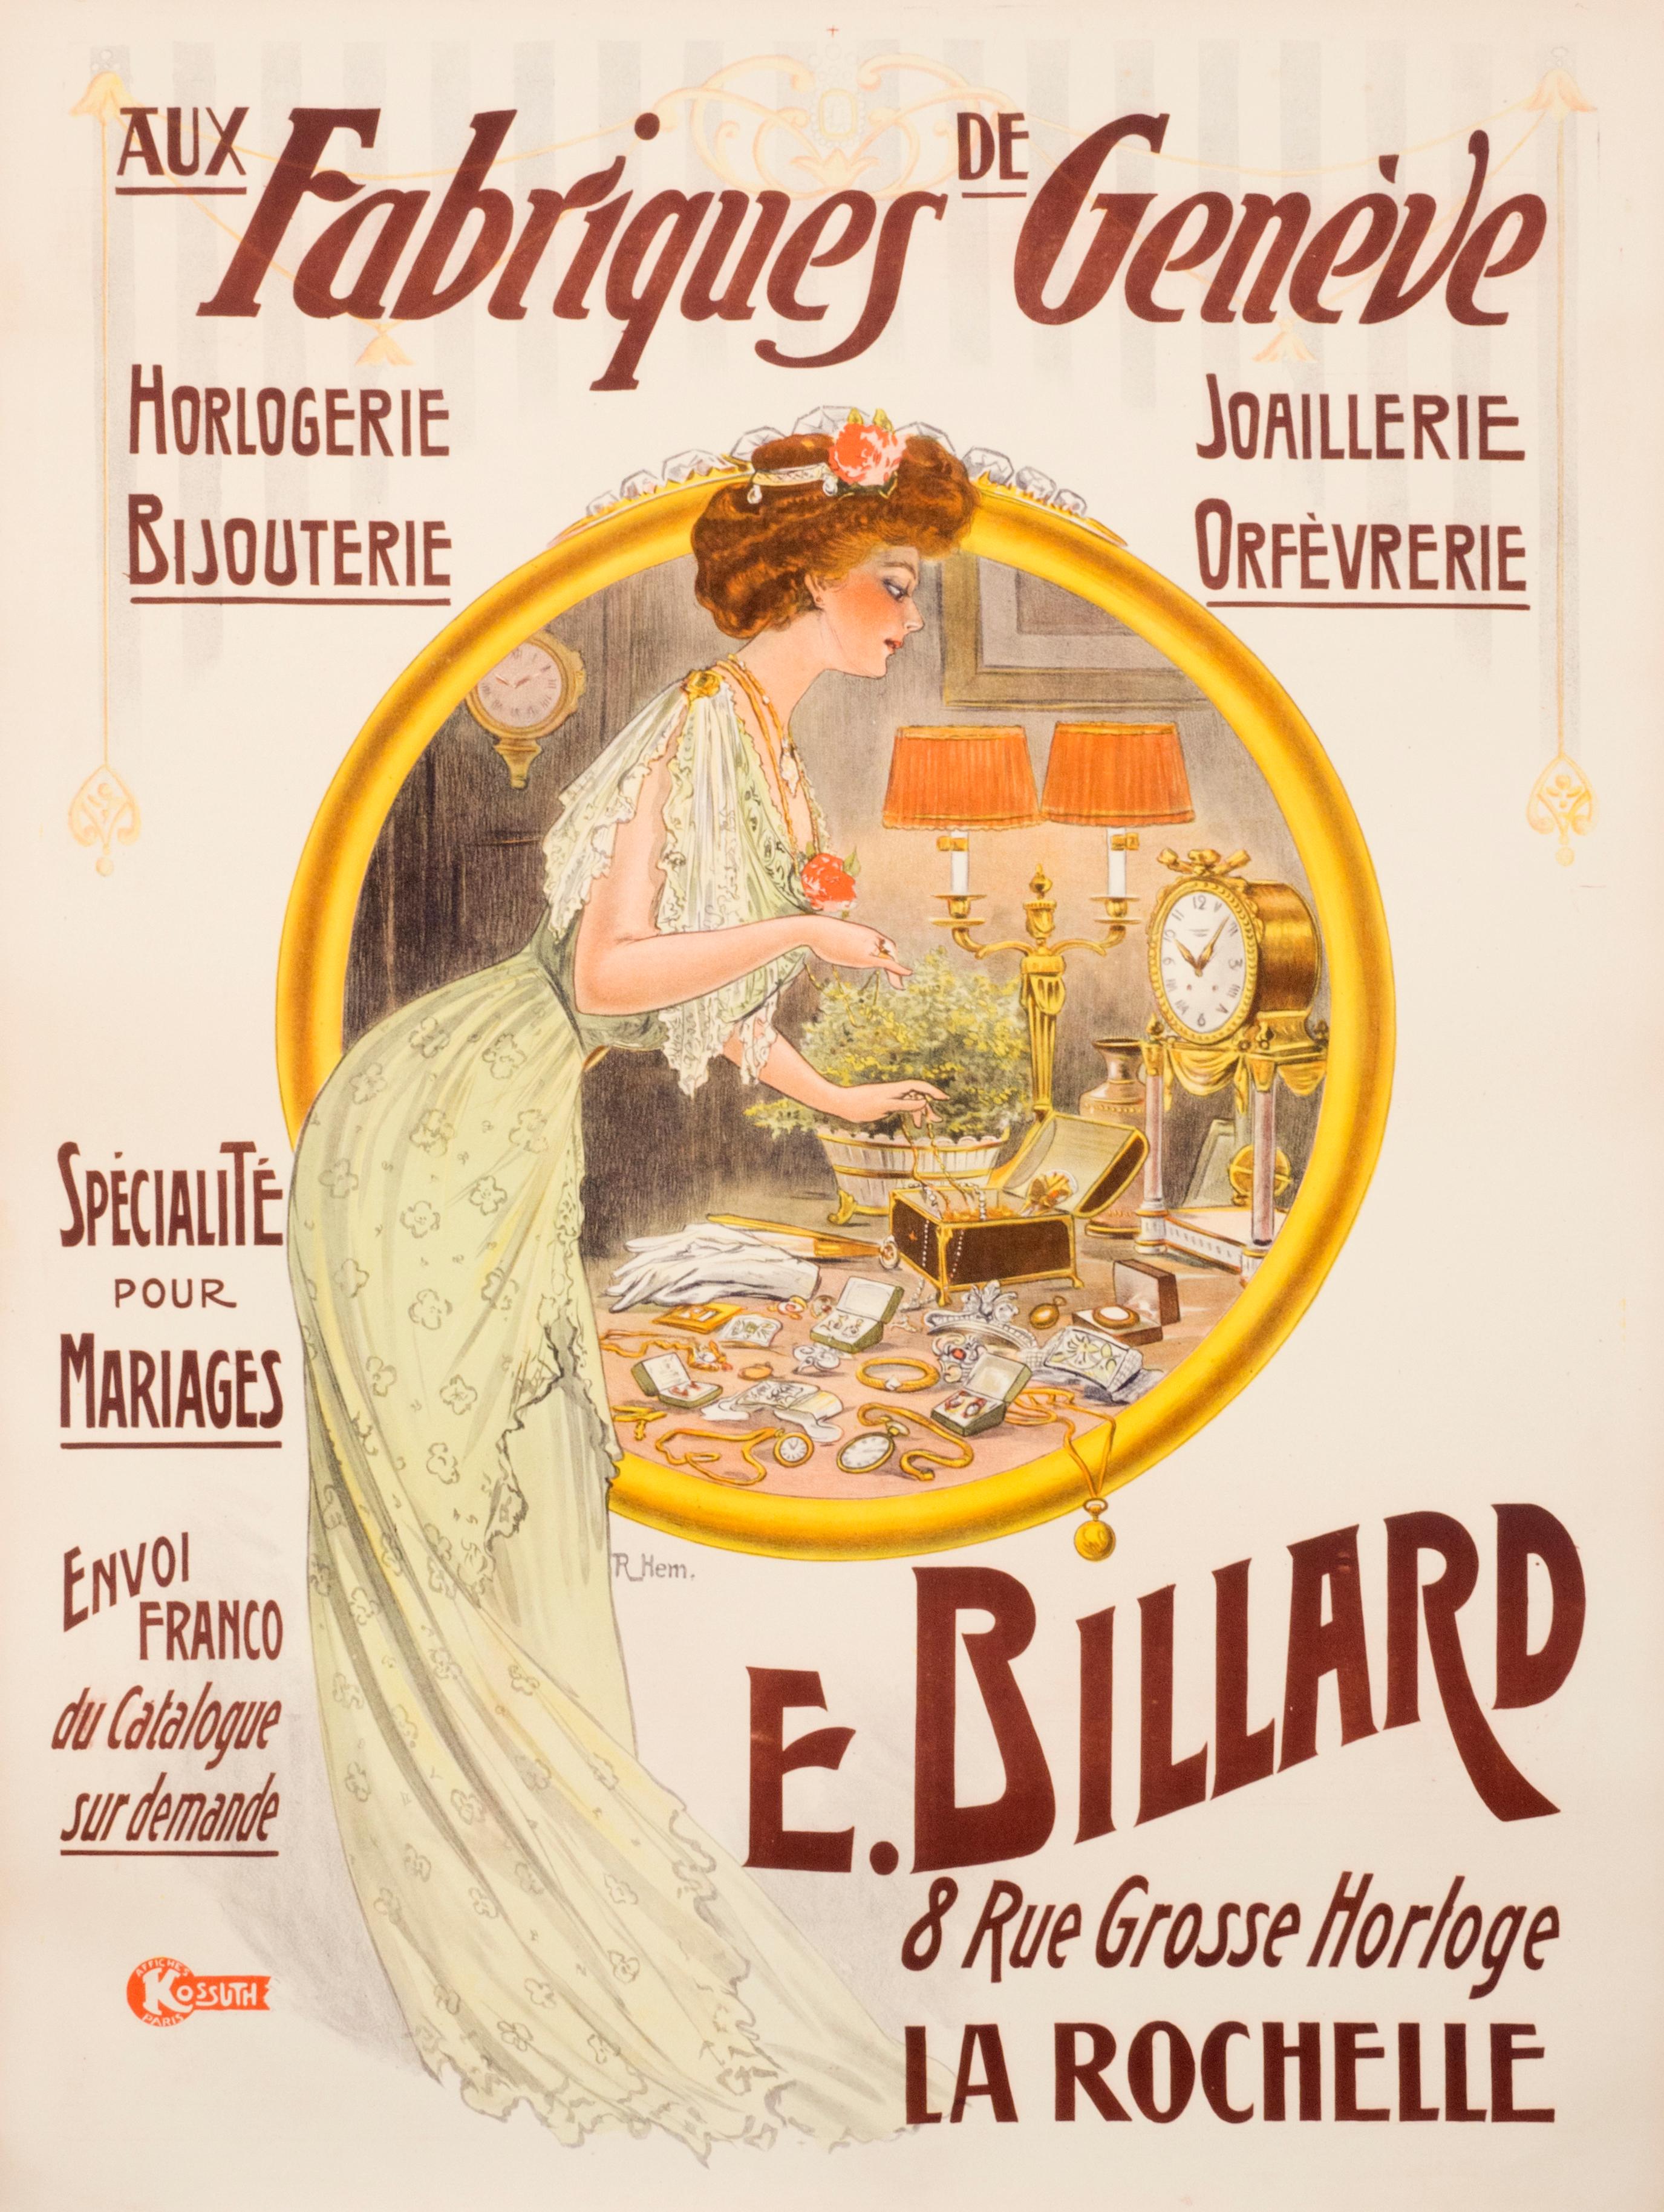 "E. Billard"  Geneva made Jewelry & Clocks  Original Vintage Poster